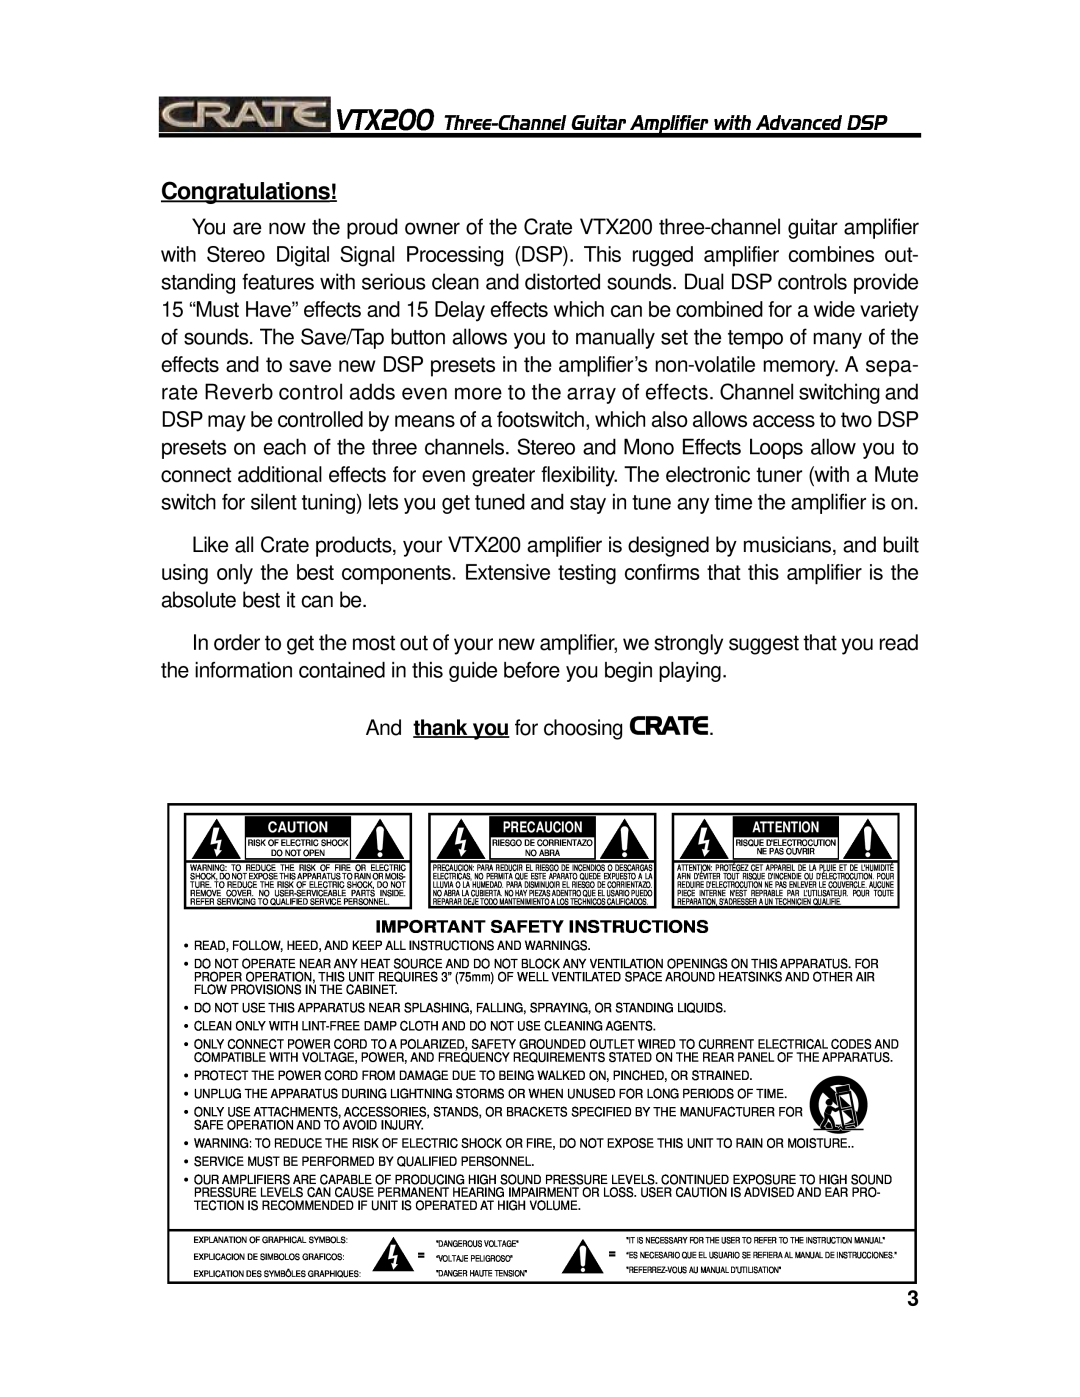 Crate Amplifiers VTX200 manual Congratulations 